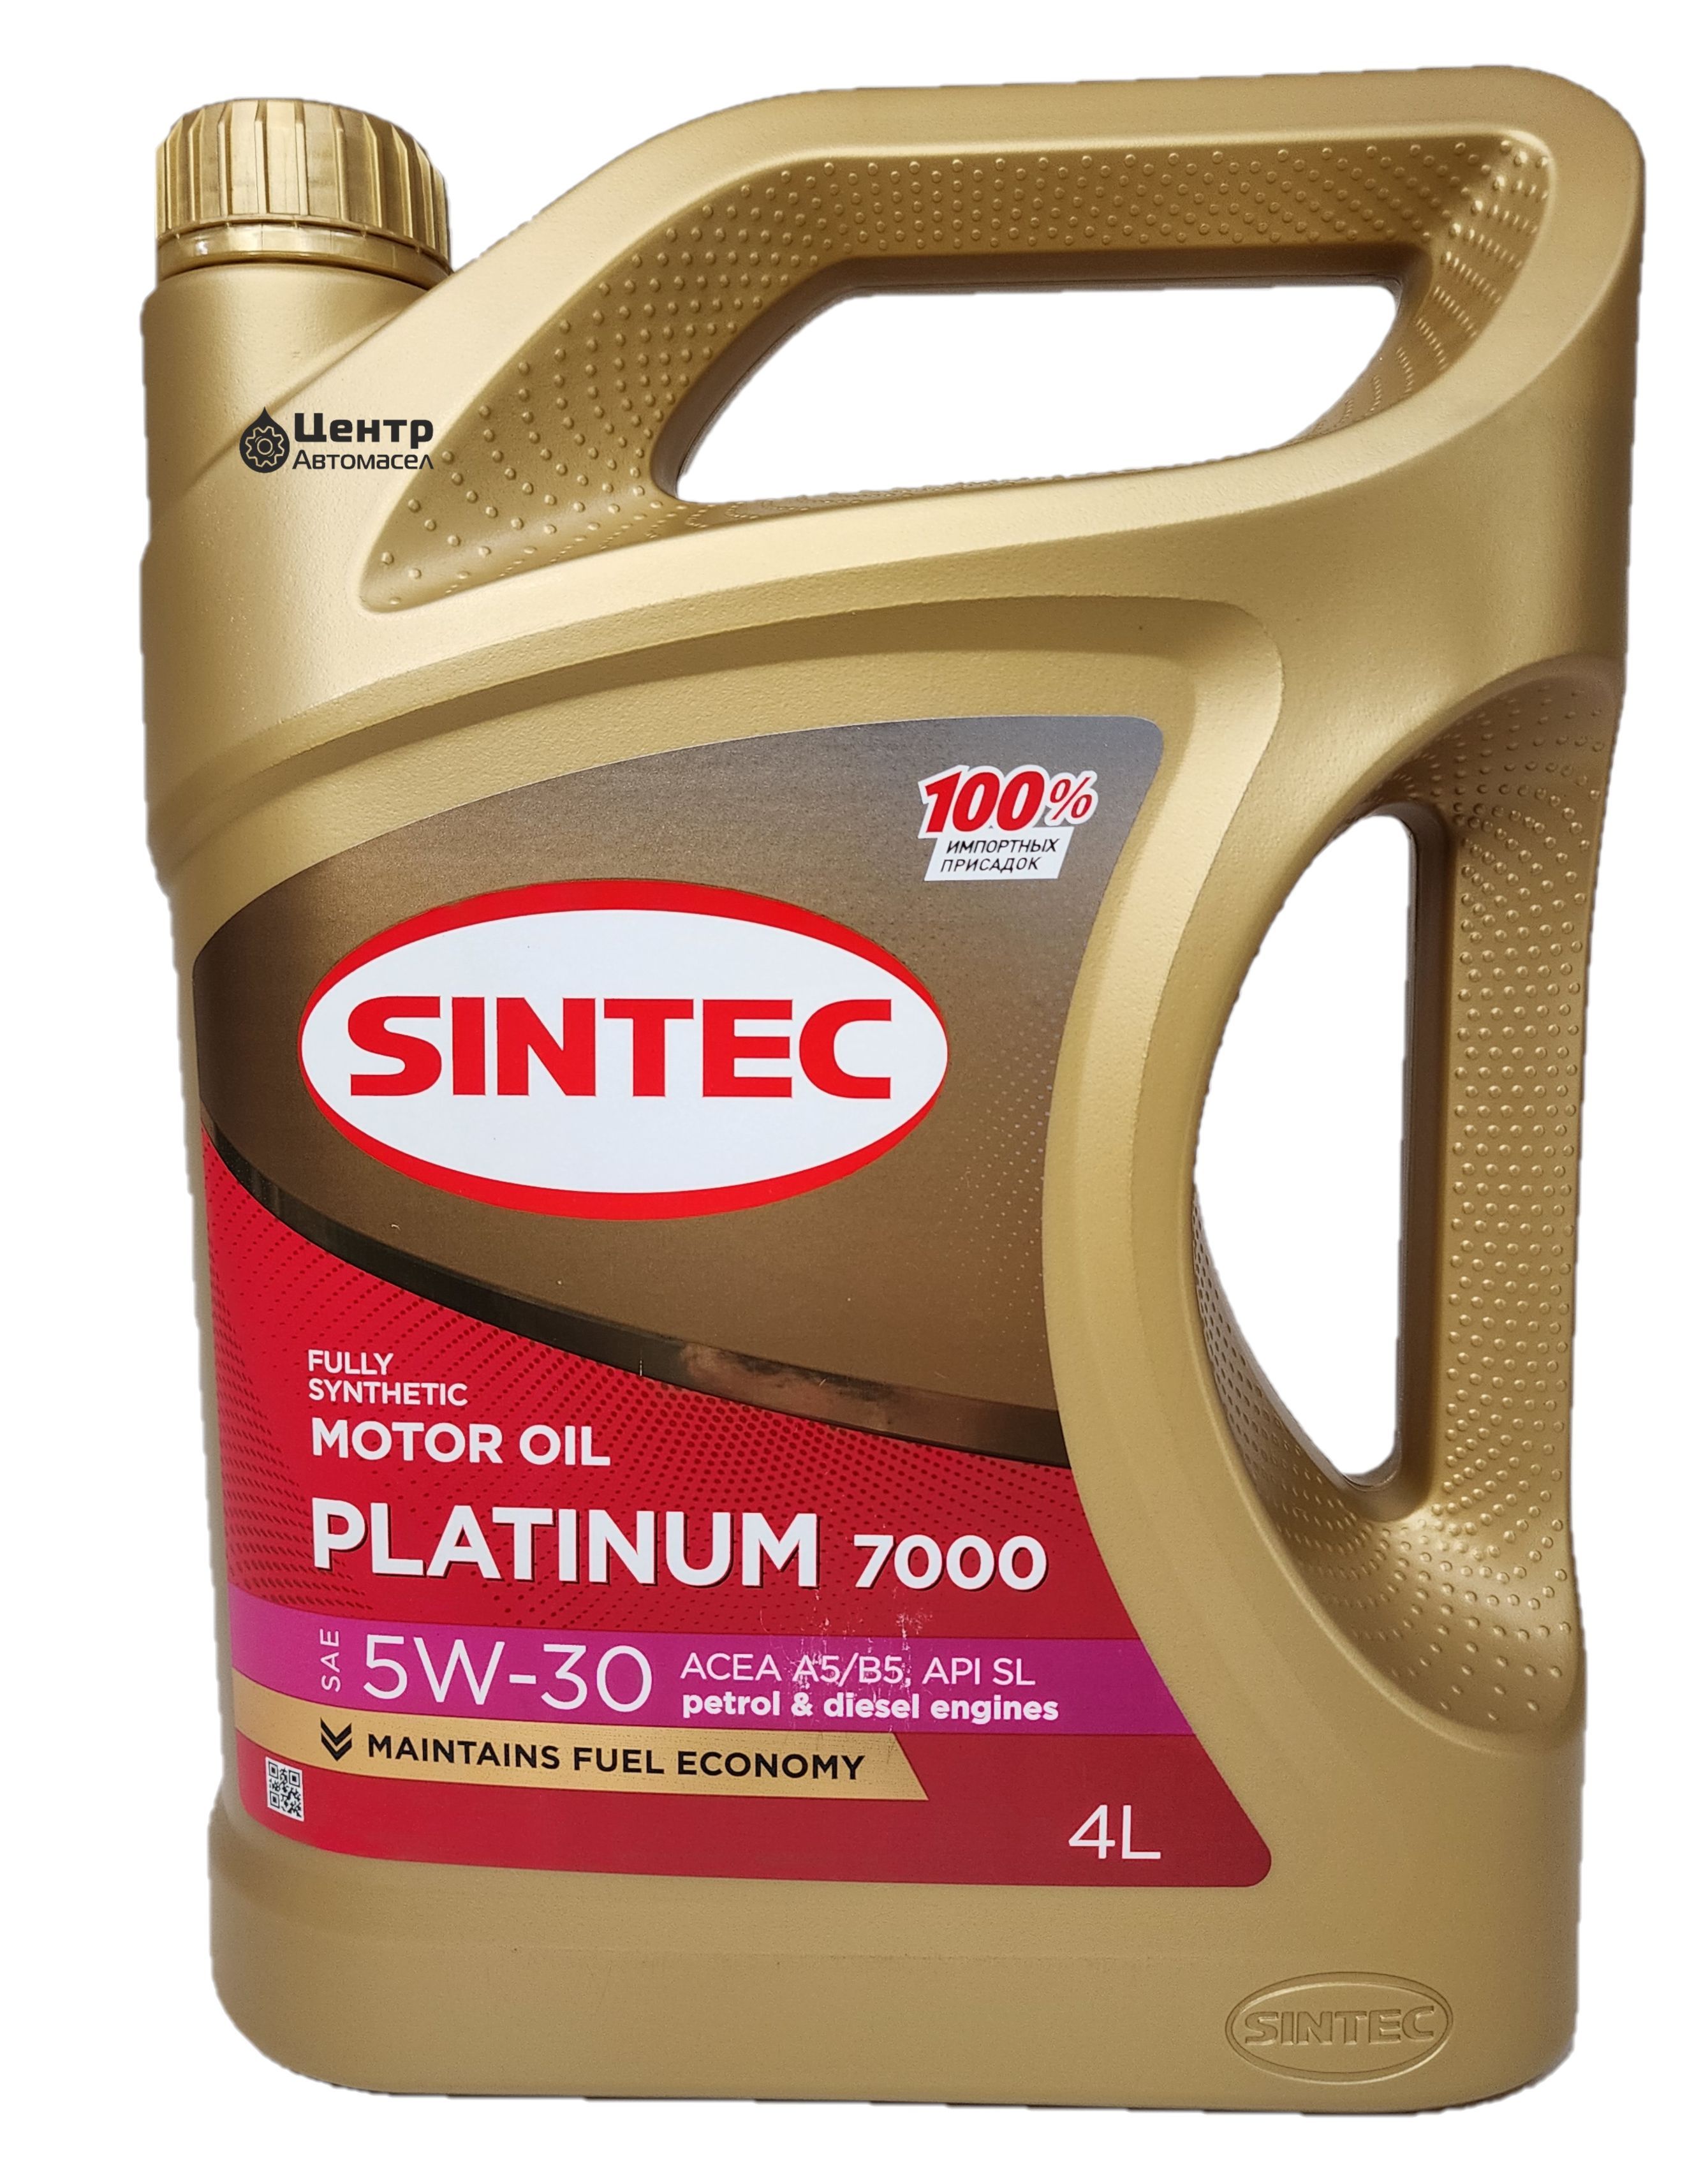 Sintec platinum 7000 5w 30 gf 6a. Моторное масло Sintec Platinum 7000 SAE 5w-30 API SL ACEA a5/b5 1 литр.